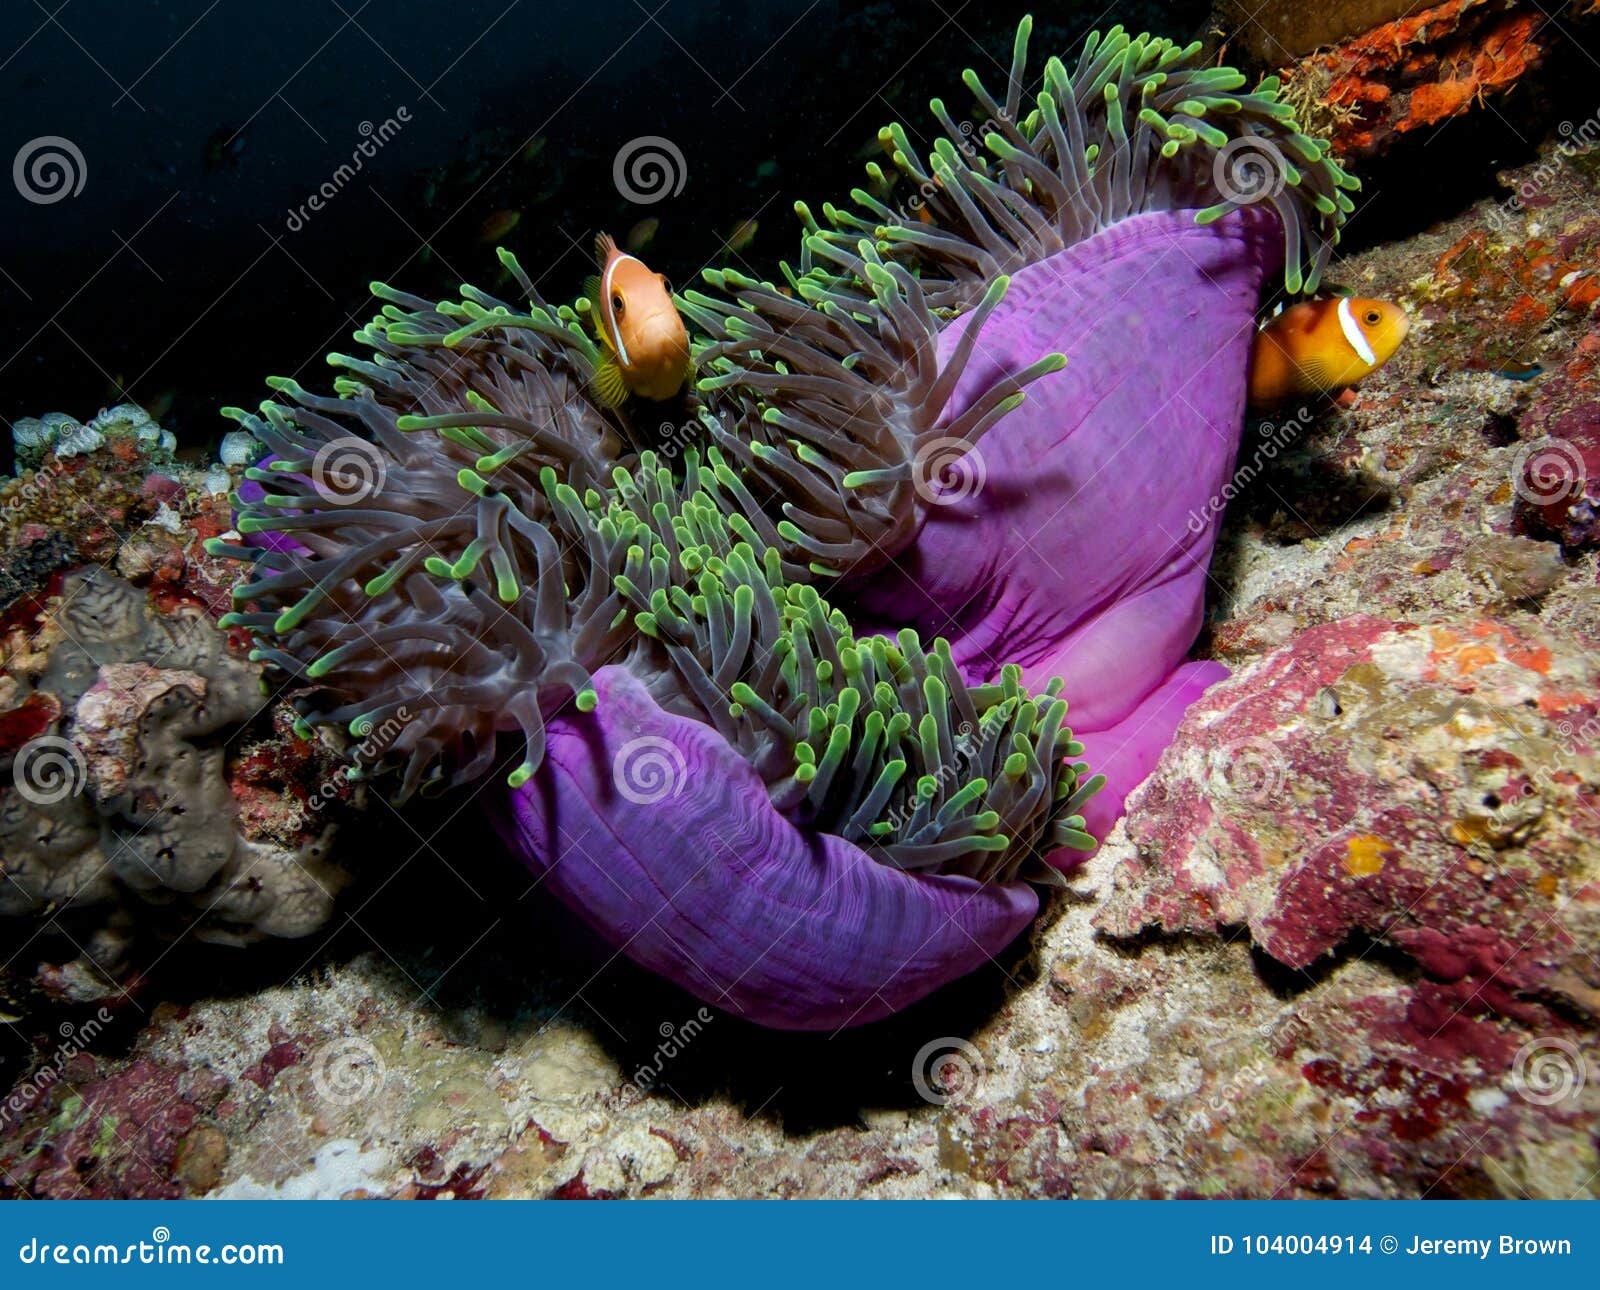 maldive anemonefish in huge anemone